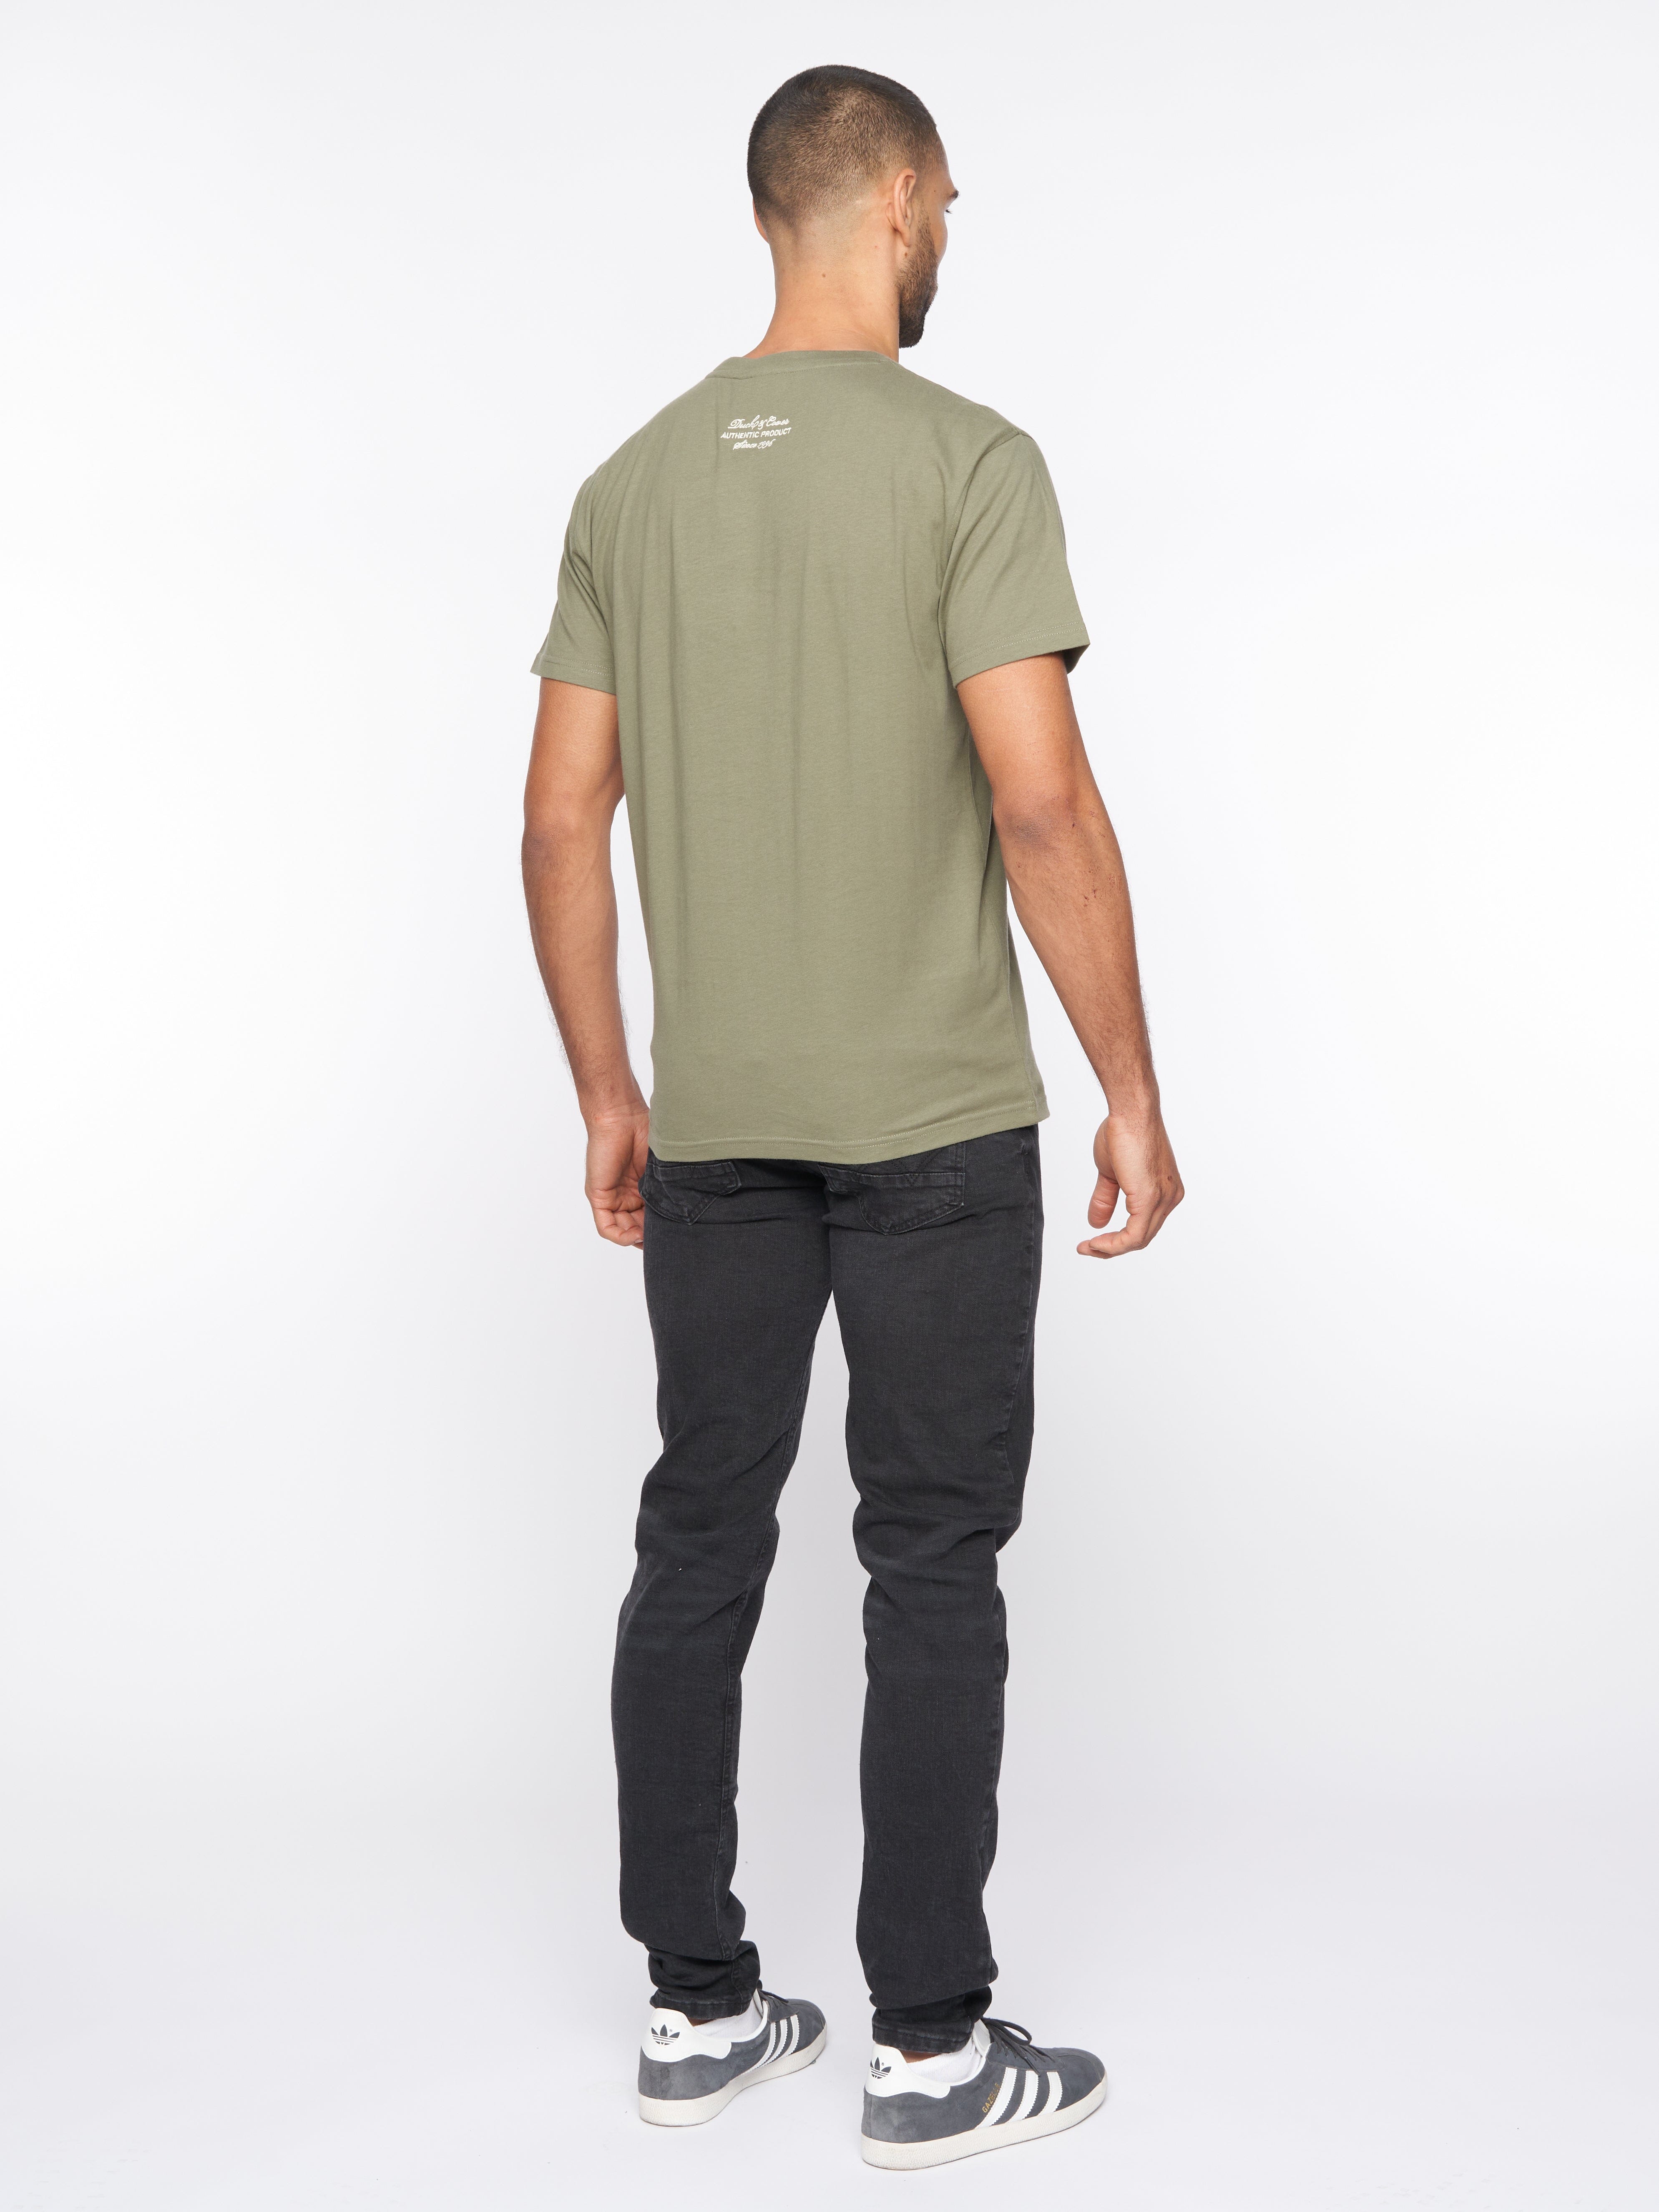 Carrillo T-Shirt Khaki Green